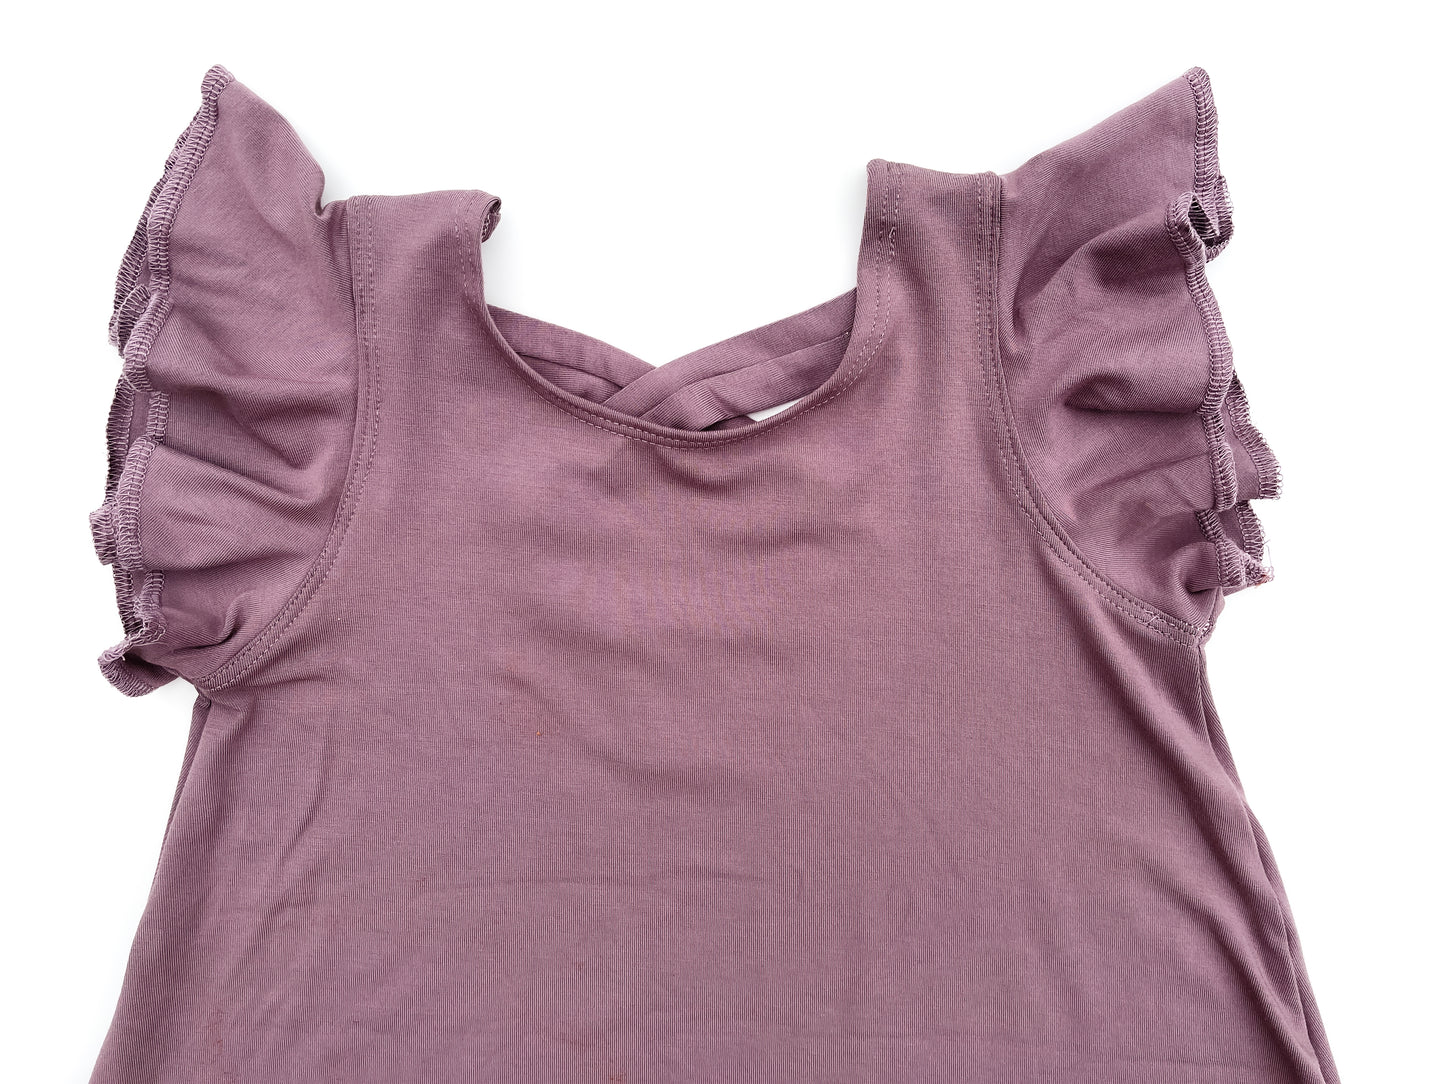 Cross Back Dress | Lavender - One Kind Clothing, LLC